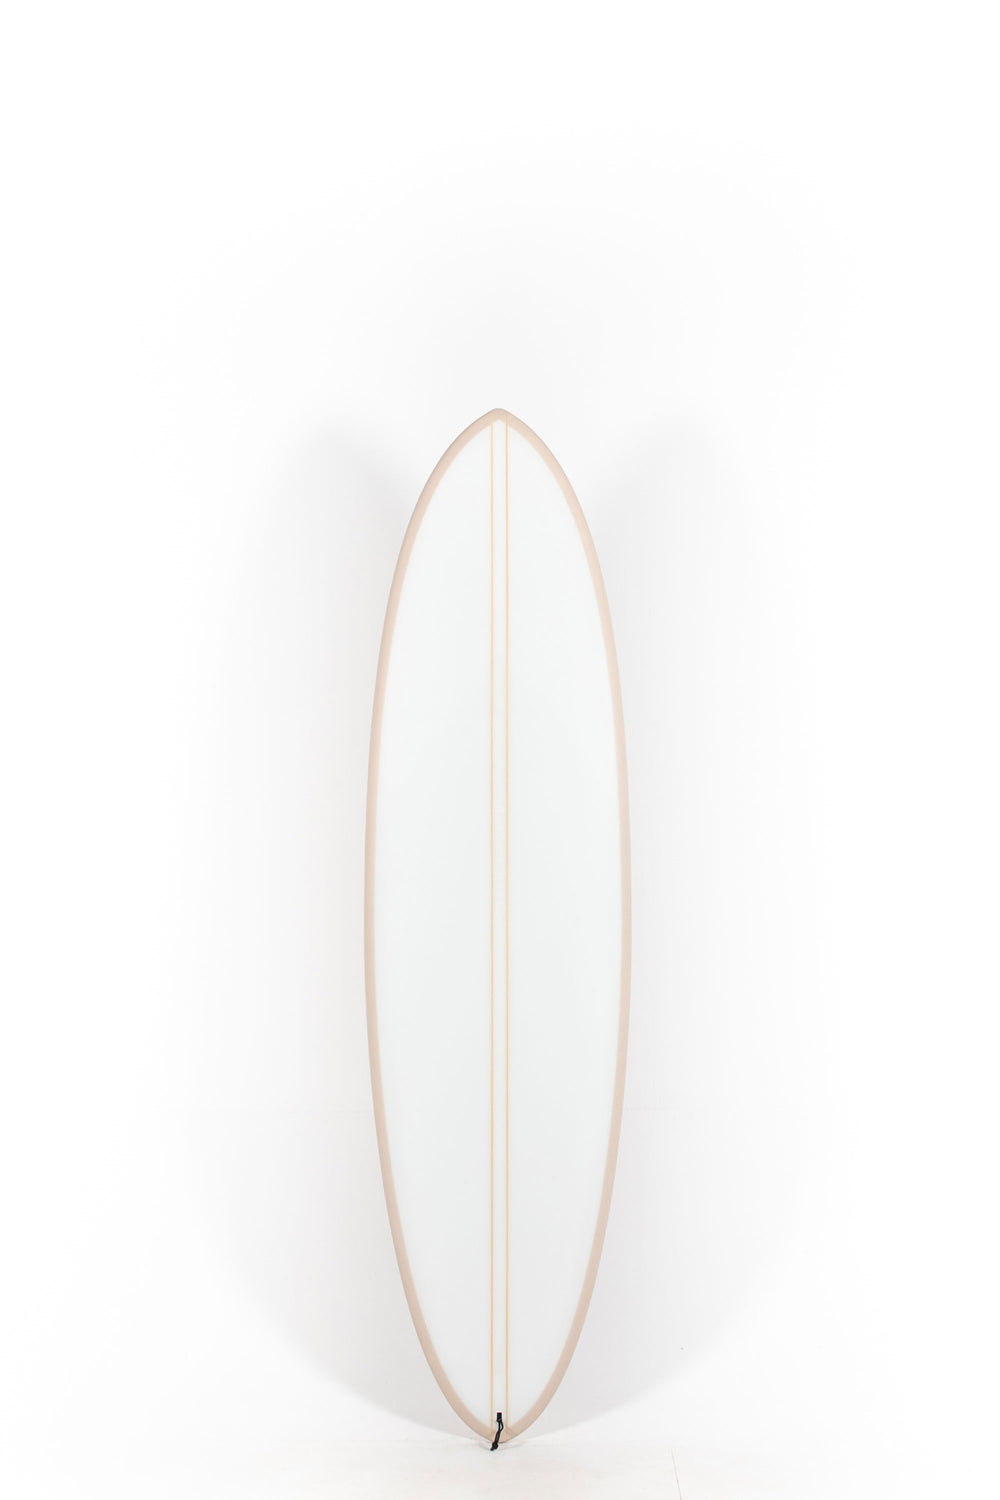 Pukas Surf Shop - HaydenShapes Surfboard - MID LENGTH GLIDER - DUST - 6'7